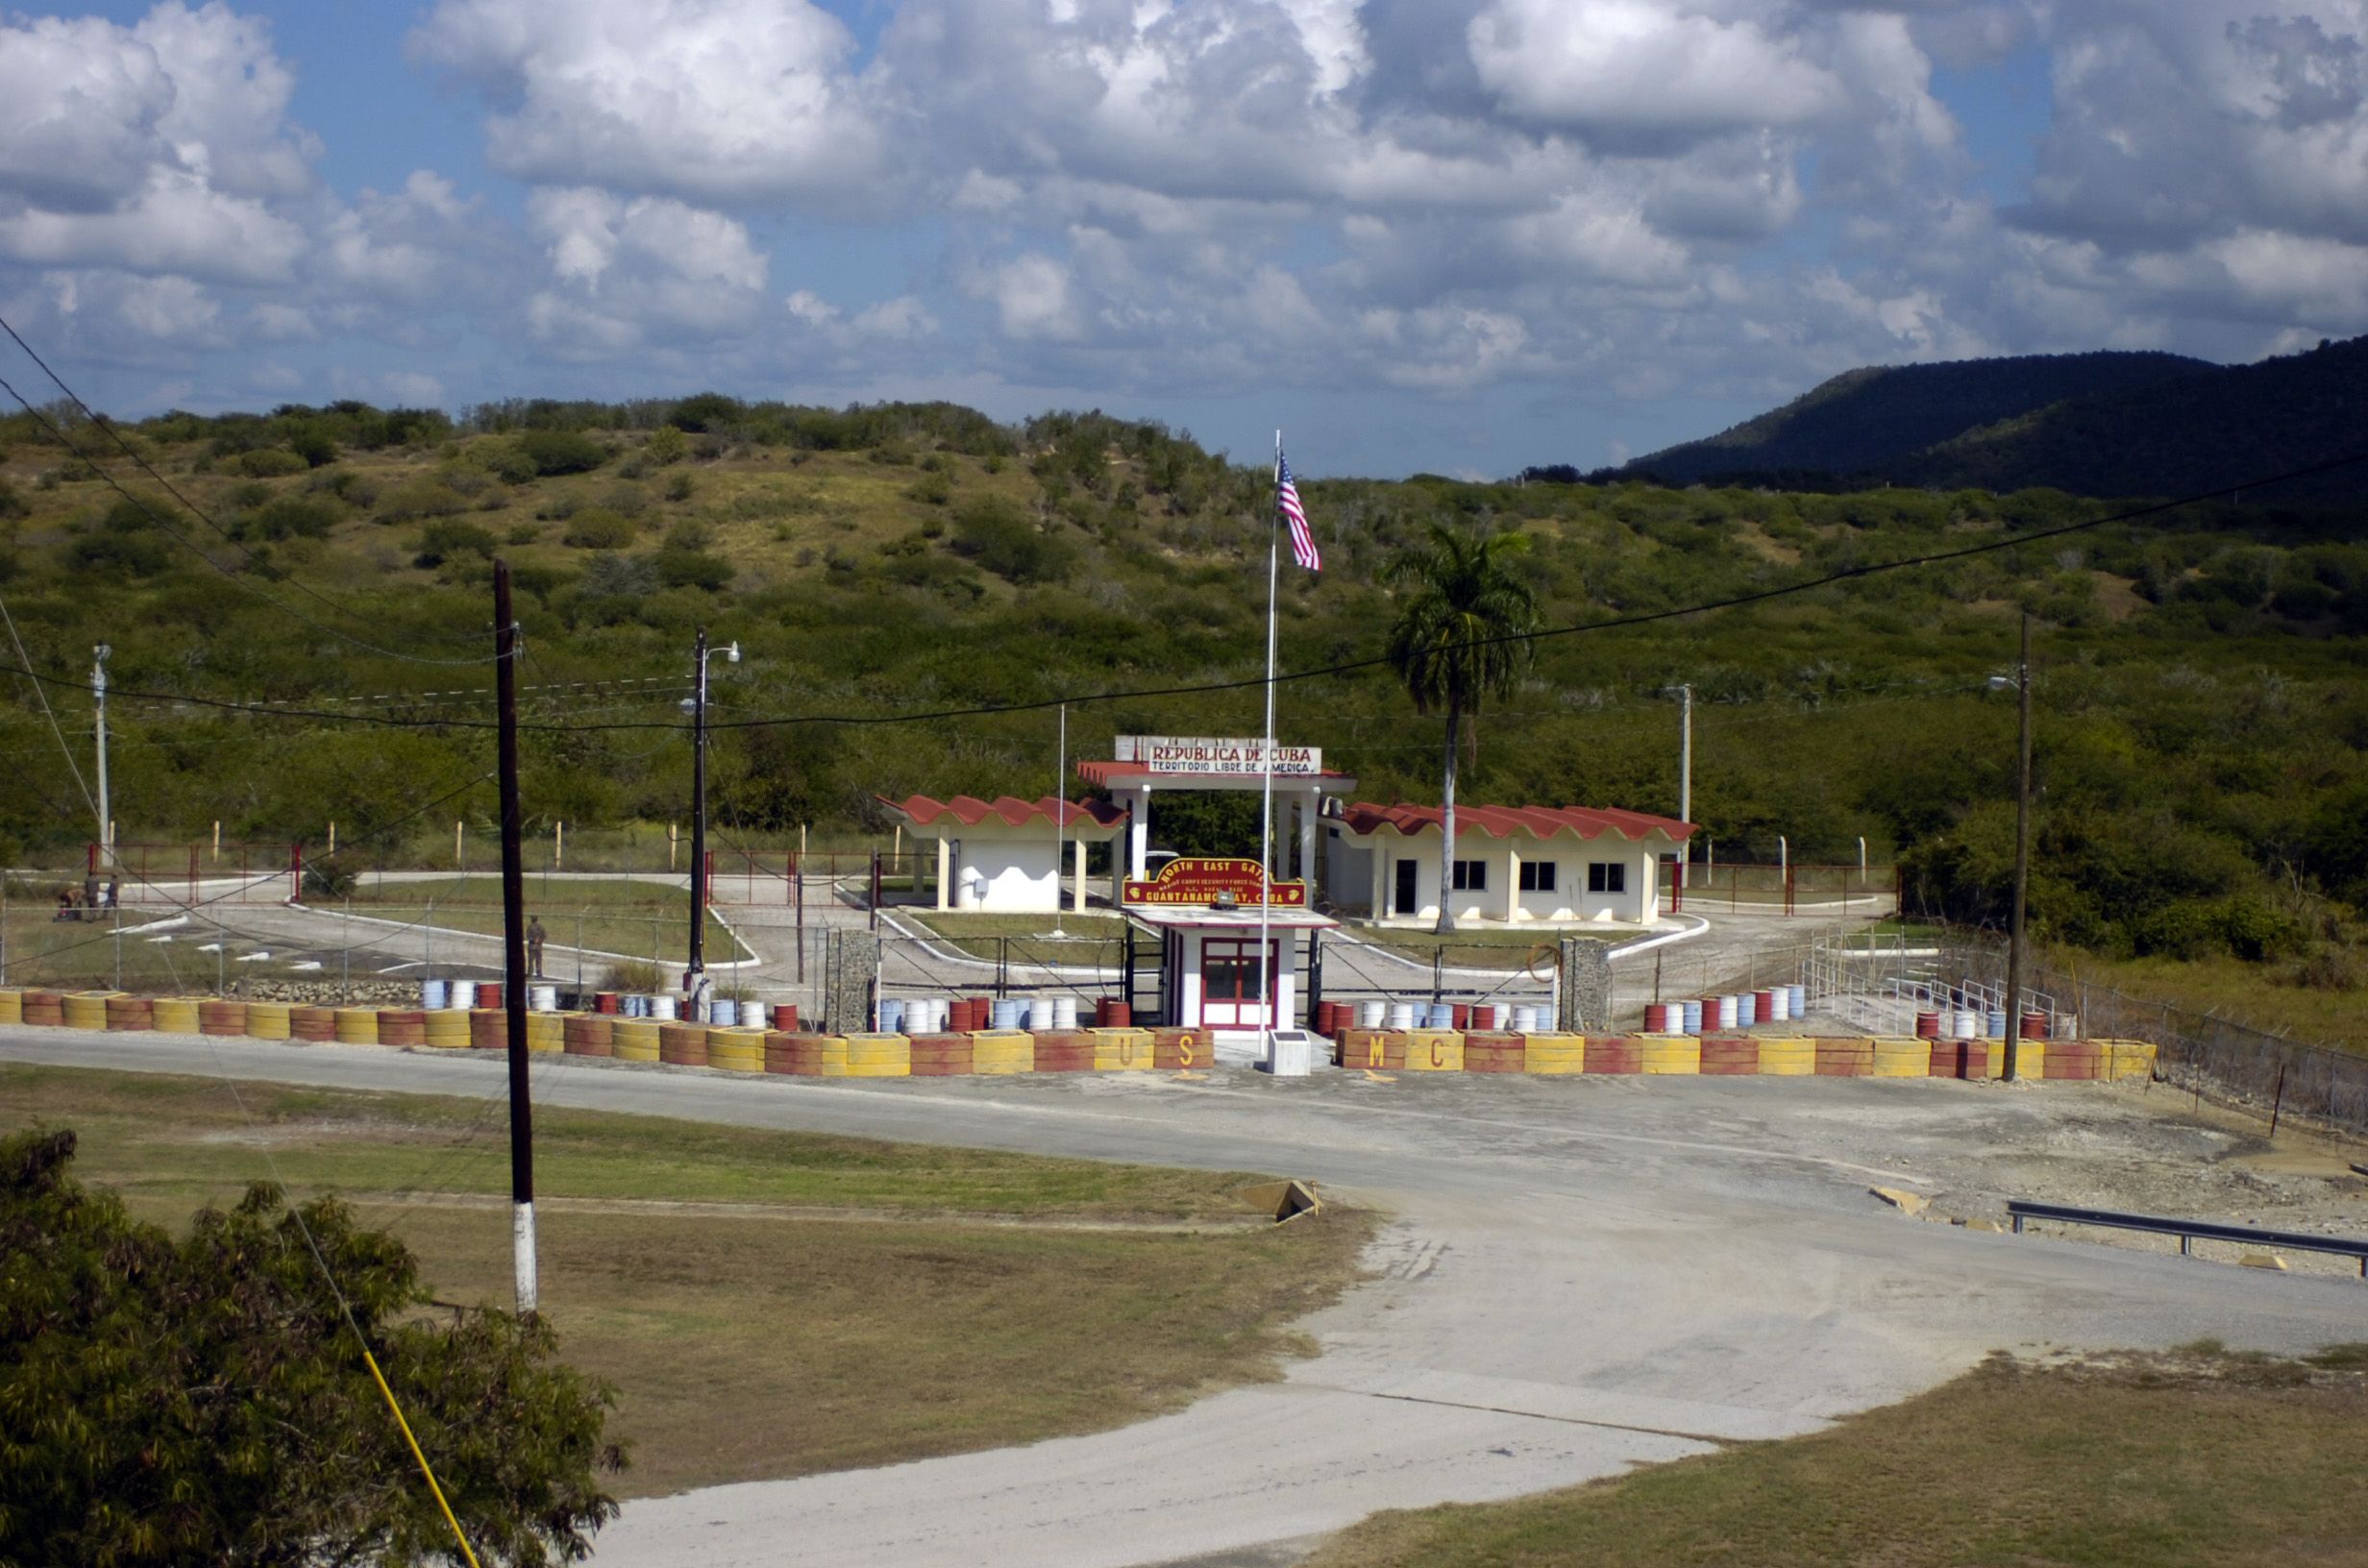 Guantanamo Bay Detention Center's Northeast Gate. Image by Sgt. Jim Greenhill/National Guard Bureau. Guantanamo Bay 2006.